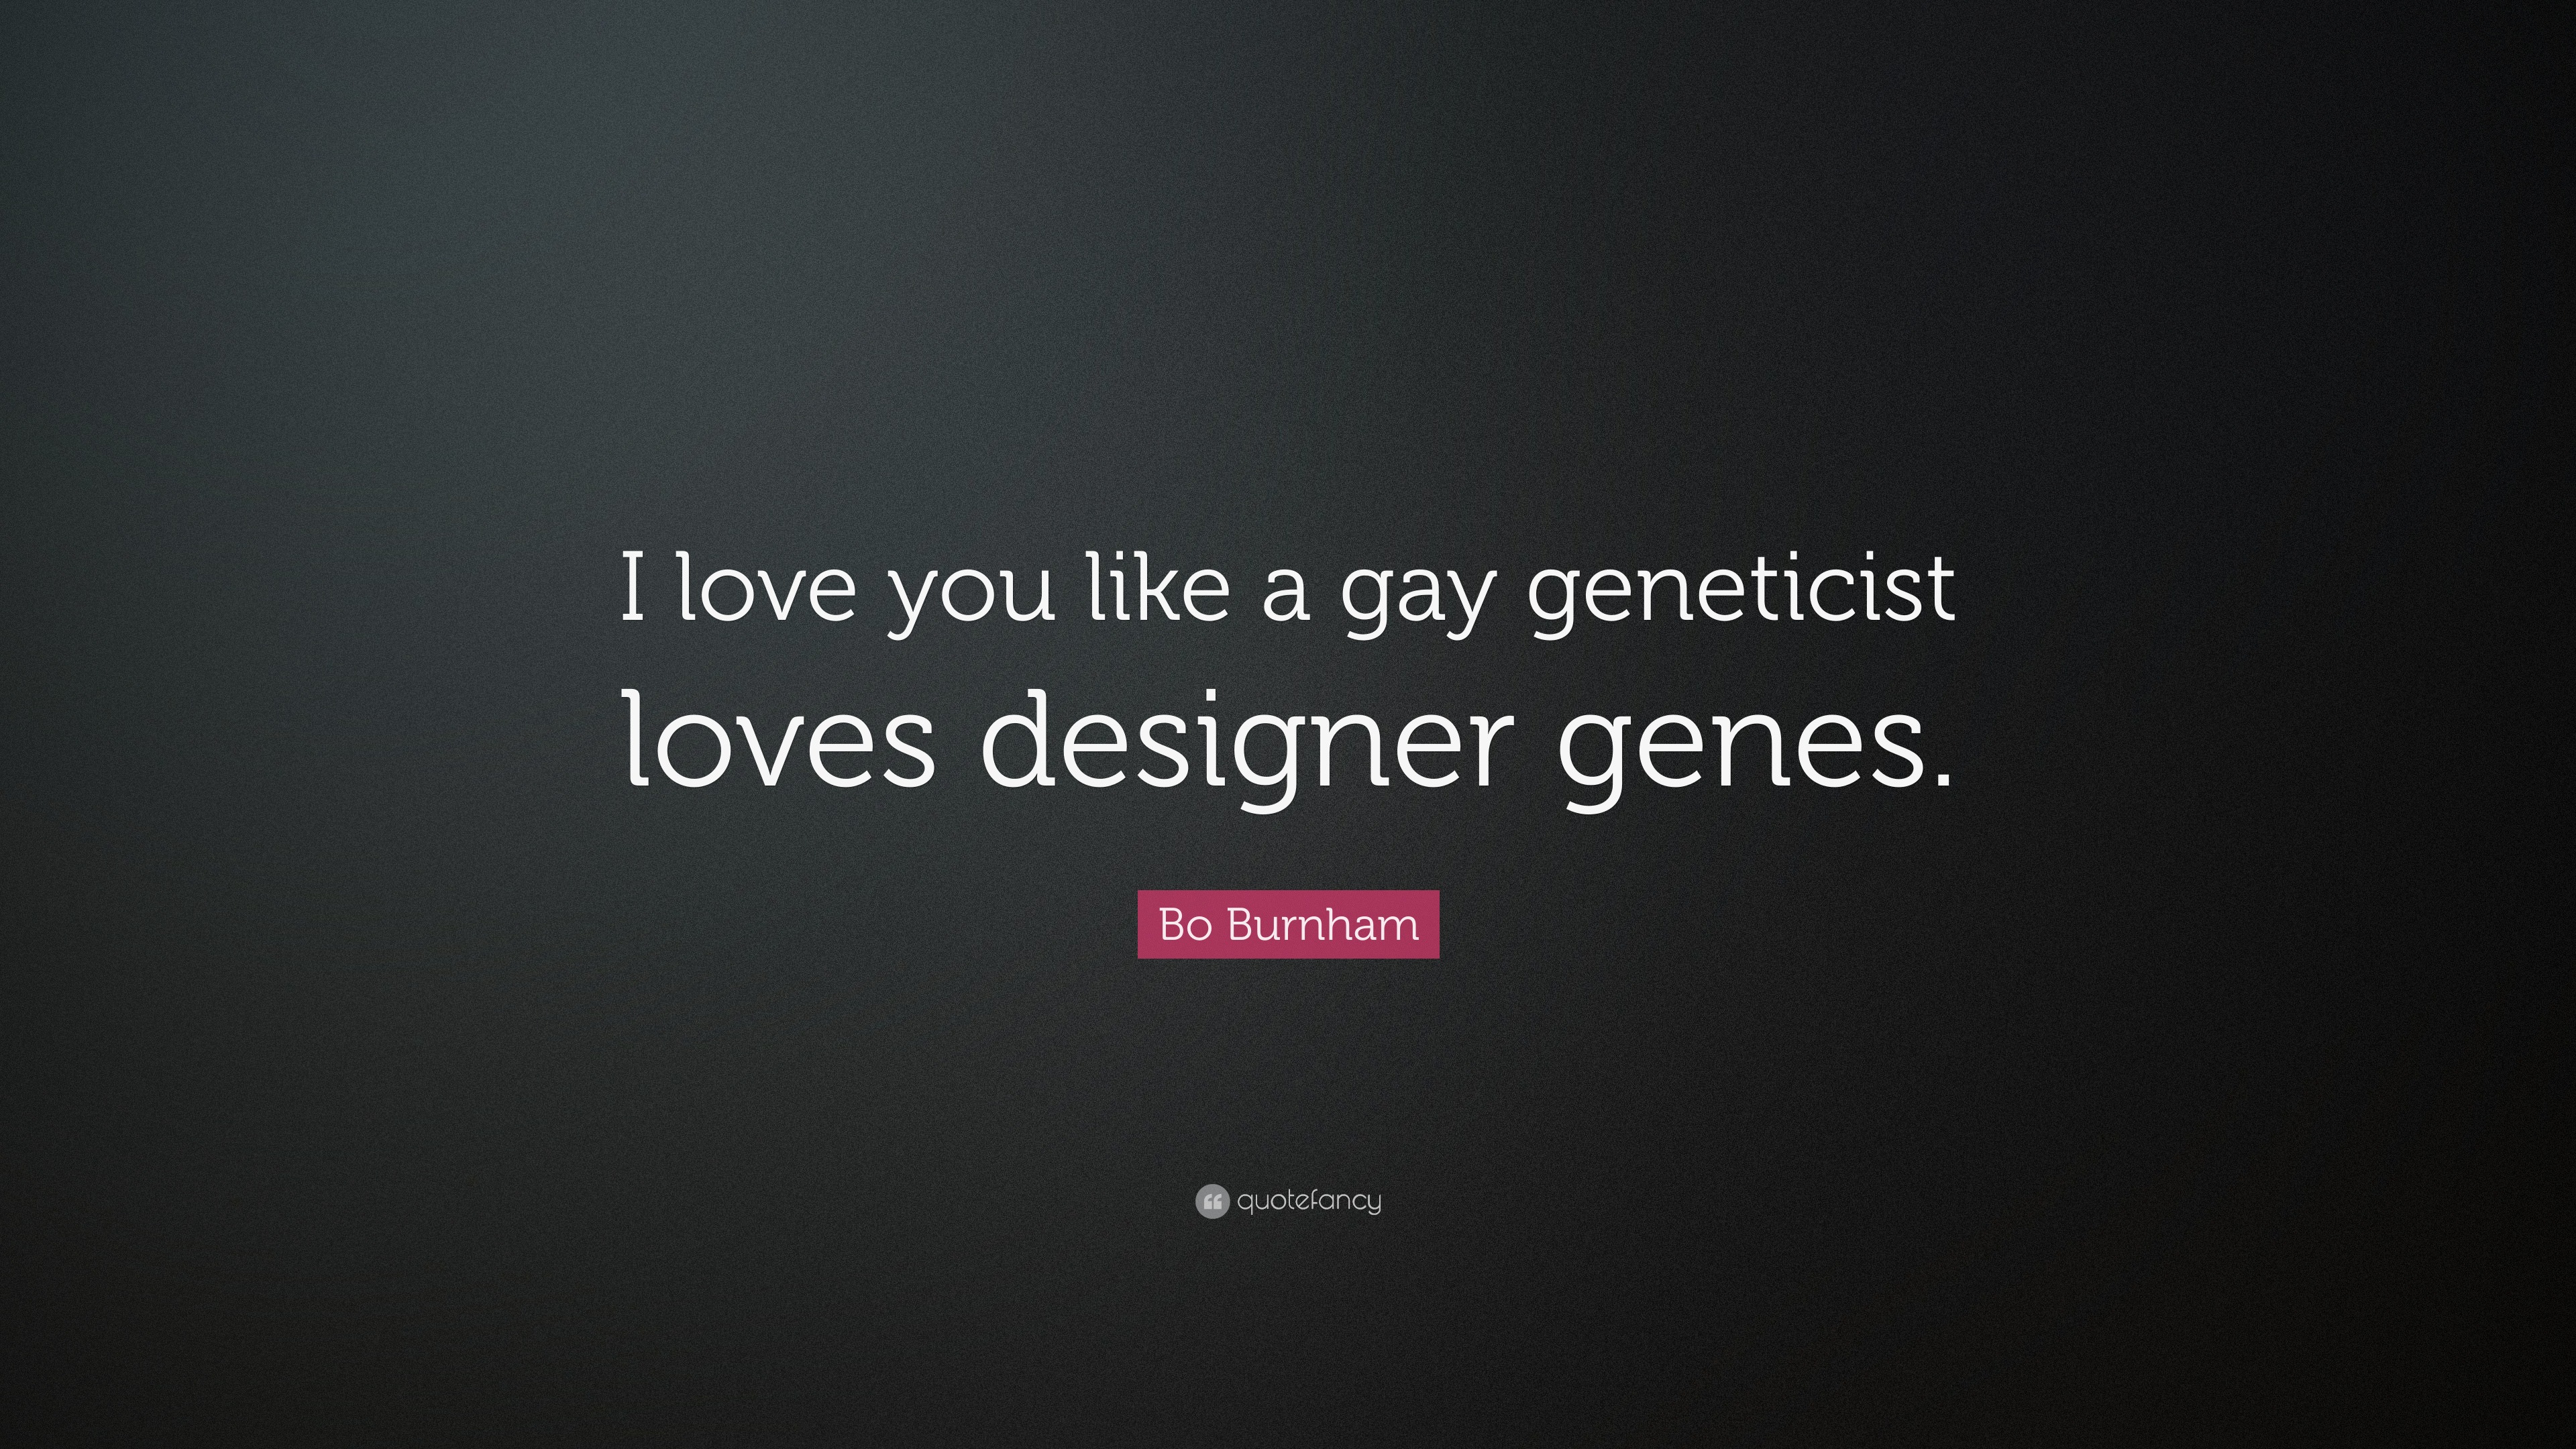 Bo Burnham Quote “I love you like a geneticist loves designer genes